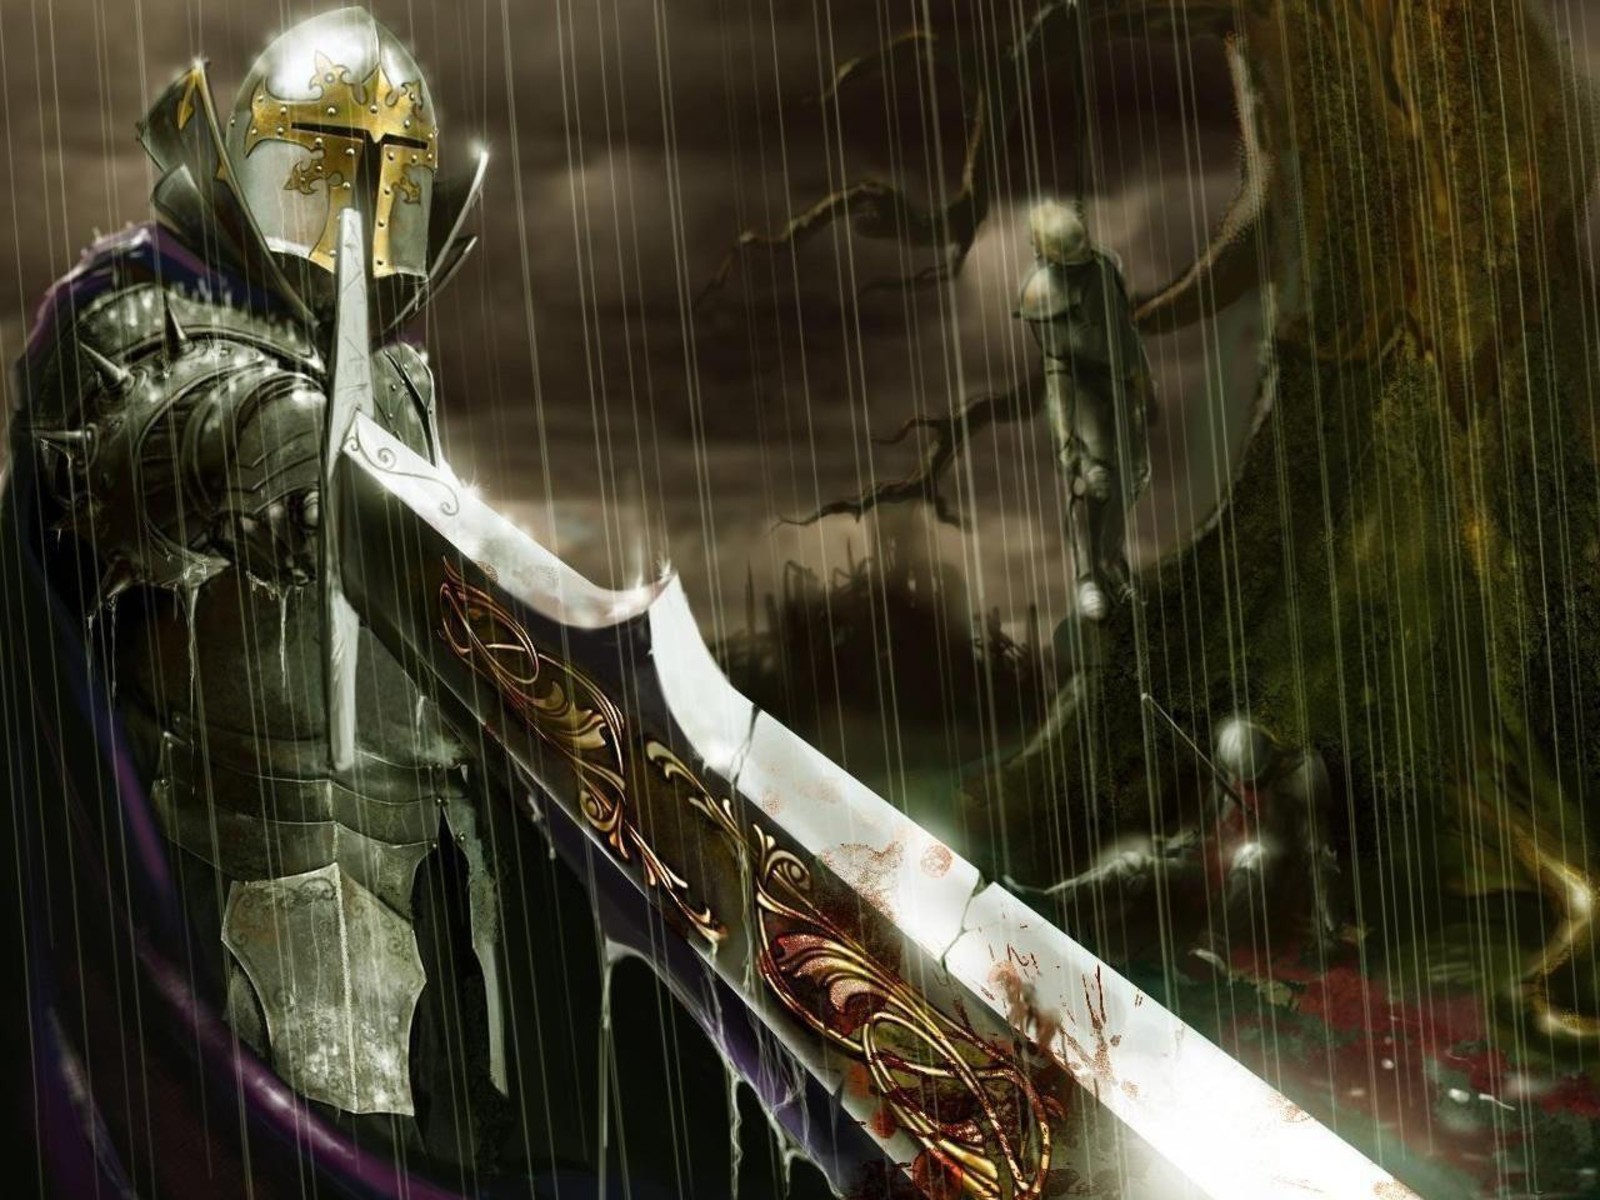 Sword in the rain